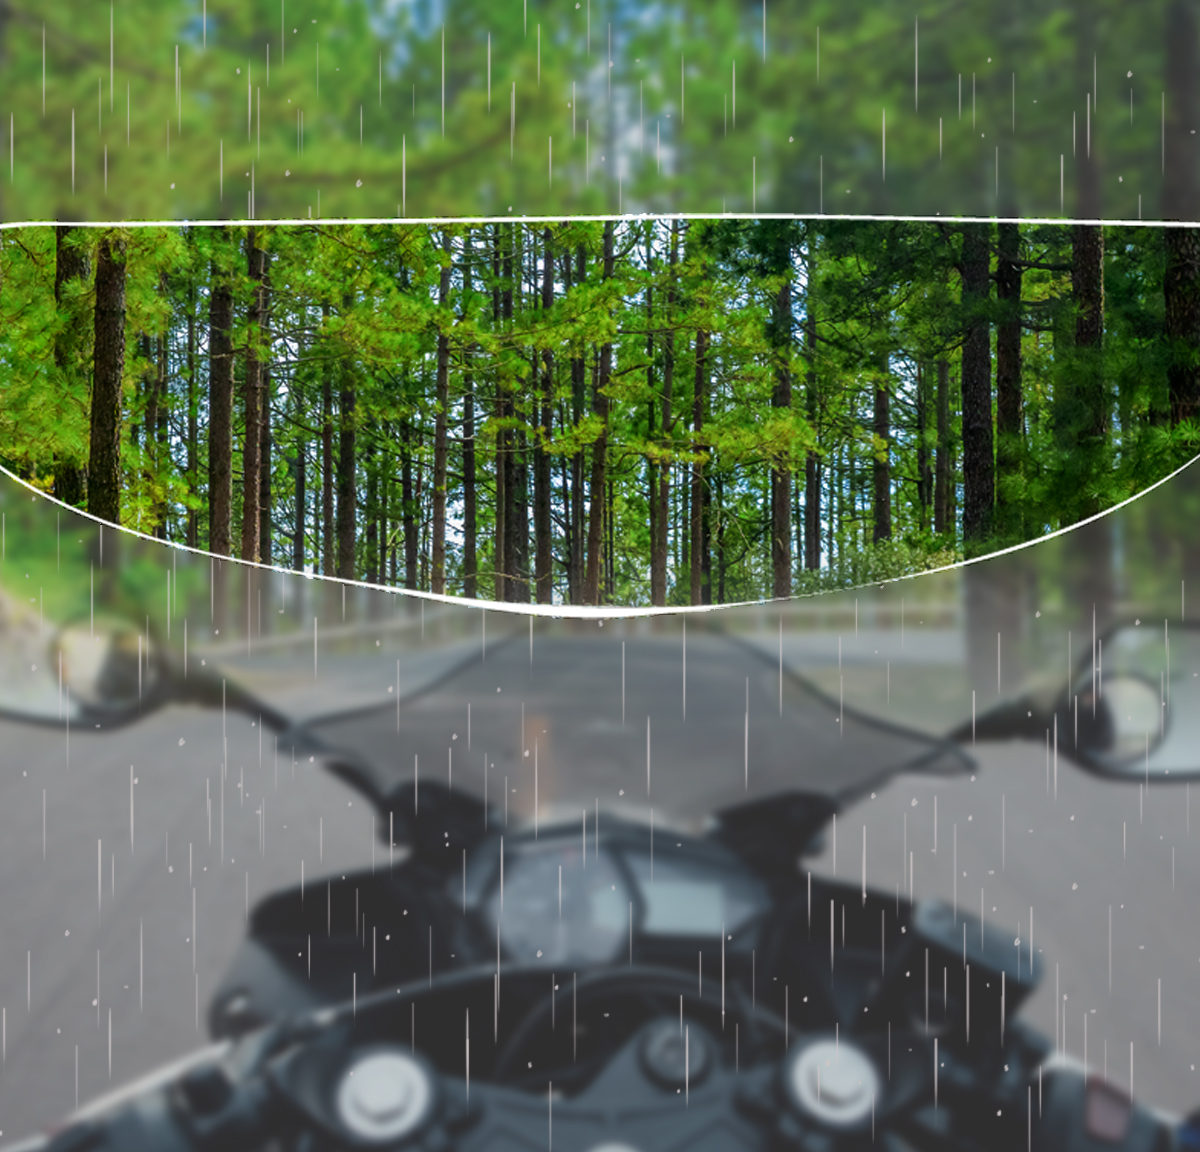 XII WY Universal Motorcycle Full Face Helmet Shield Anti Fog Film,Clear Visor Lens Insert Fog Resistant Waterproof Sticker